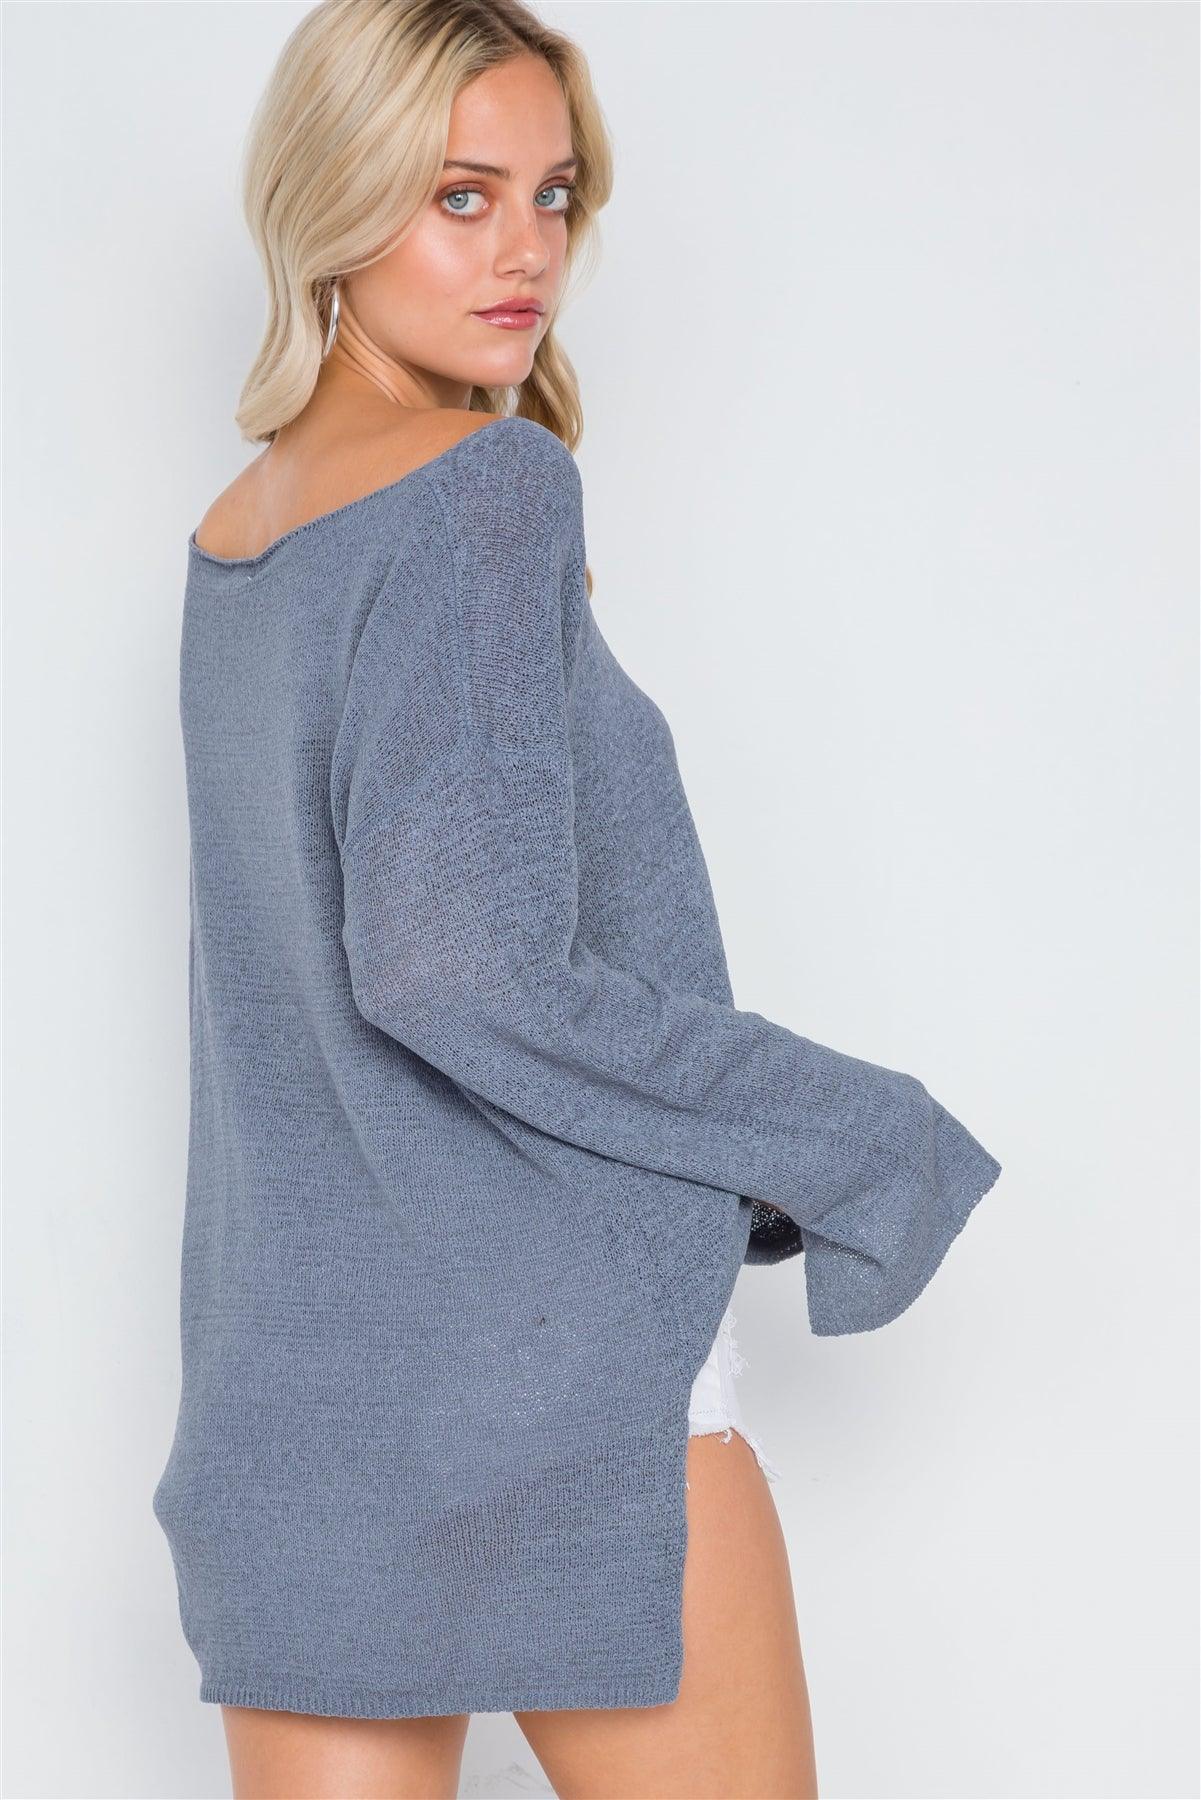 Blue Grey Scoop Neck Long Sleeves Sweater